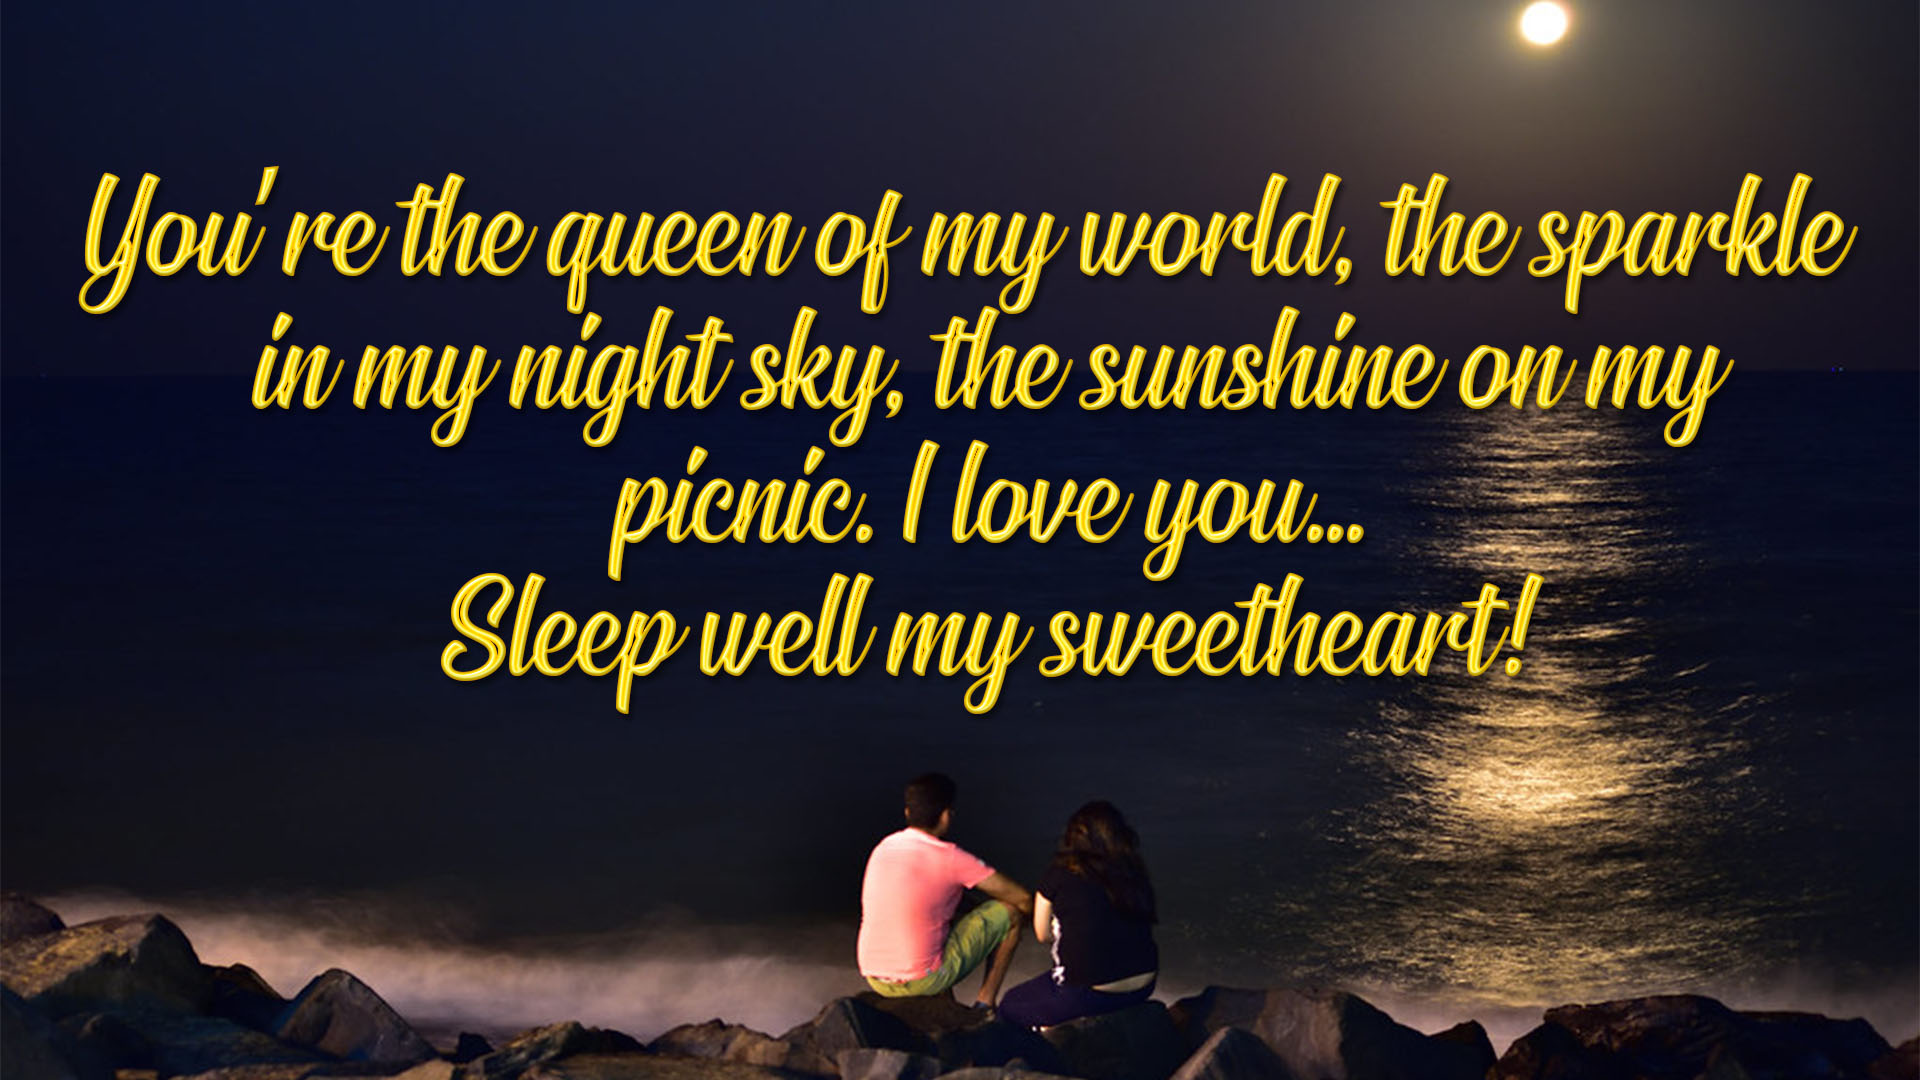 good night sweetheart wishes image